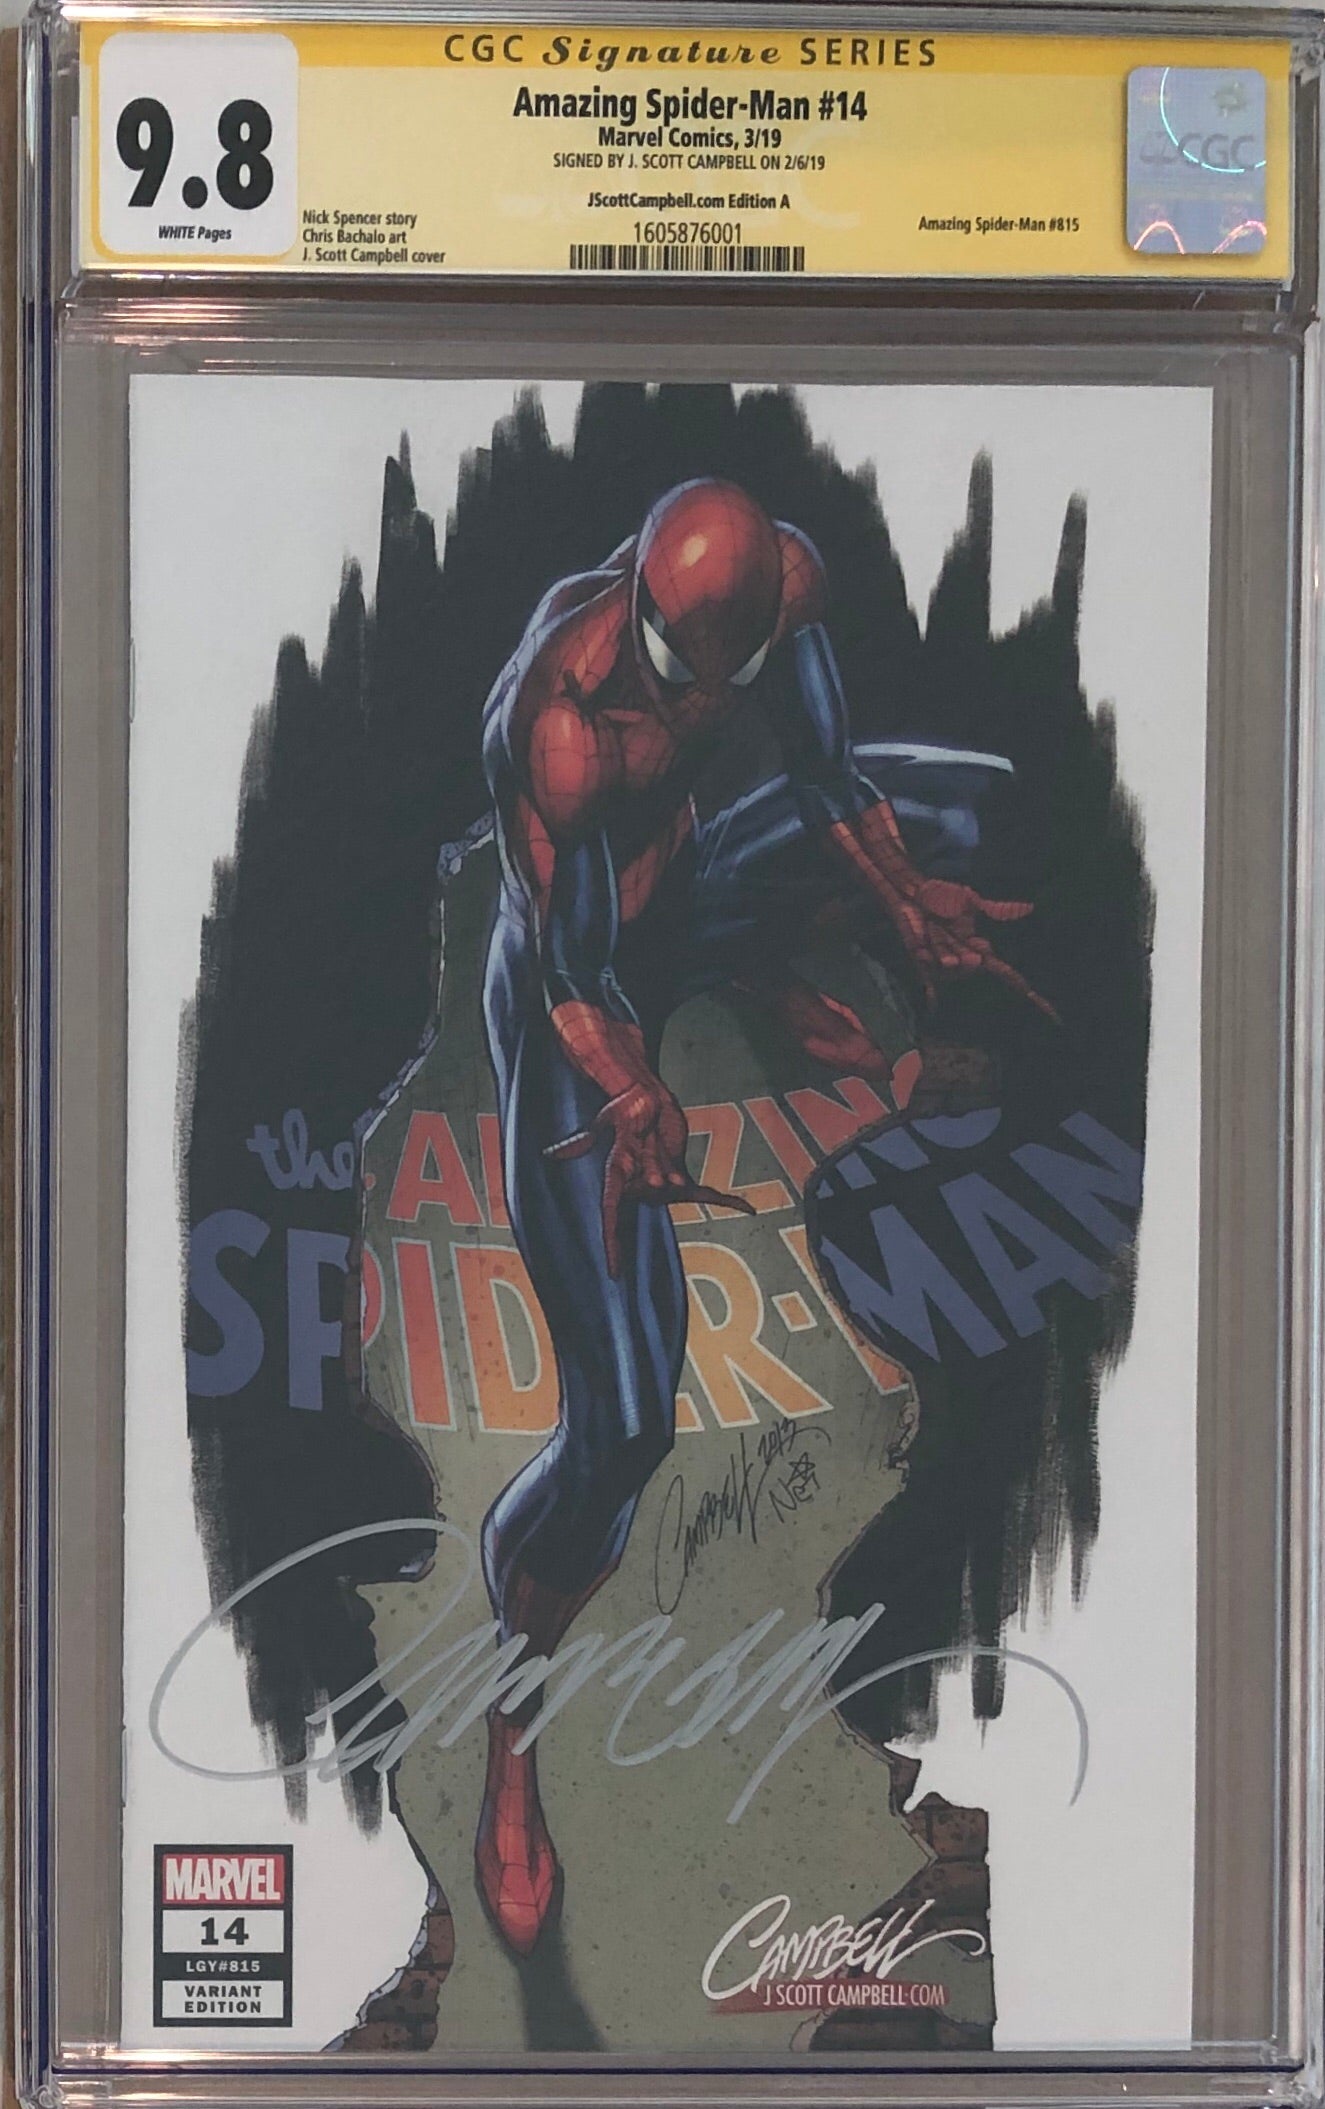 Amazing Spider-Man #14 J. Scott Campbell Edition A "Spider-Man" Exclusive CGC 9.8 SS